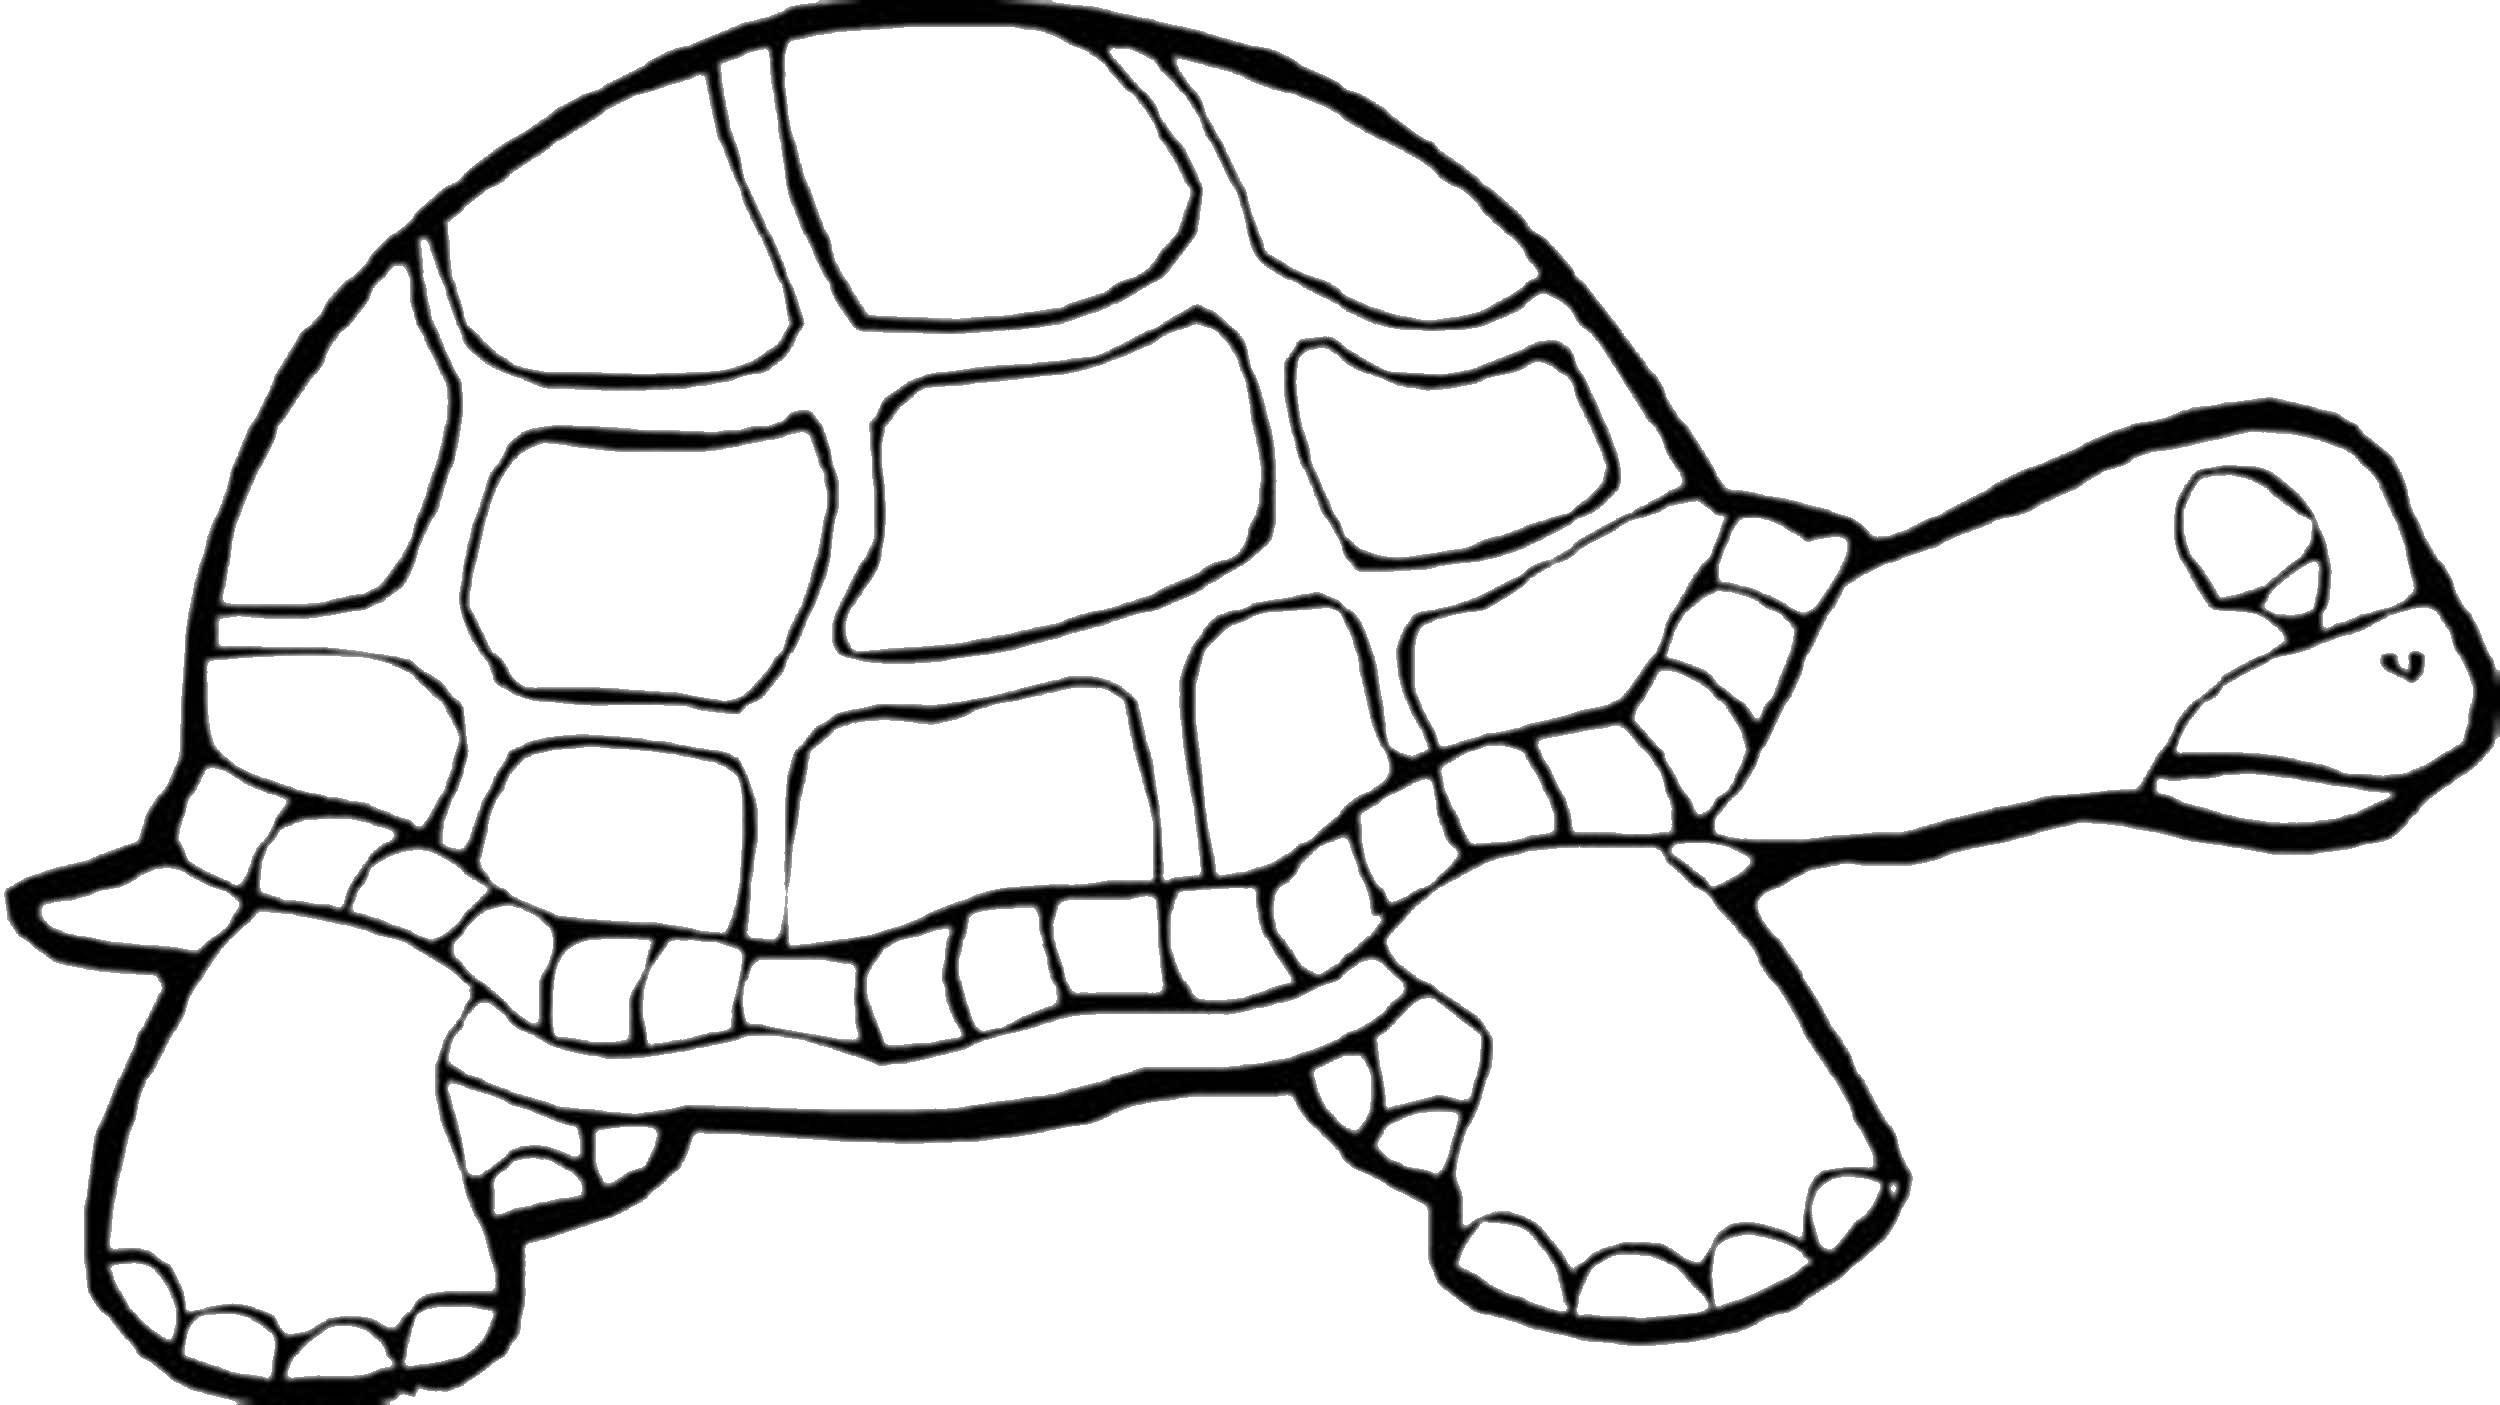 Название: Раскраска Грустная черепаха. Категория: рептилии. Теги: Рептилия, черепаха.